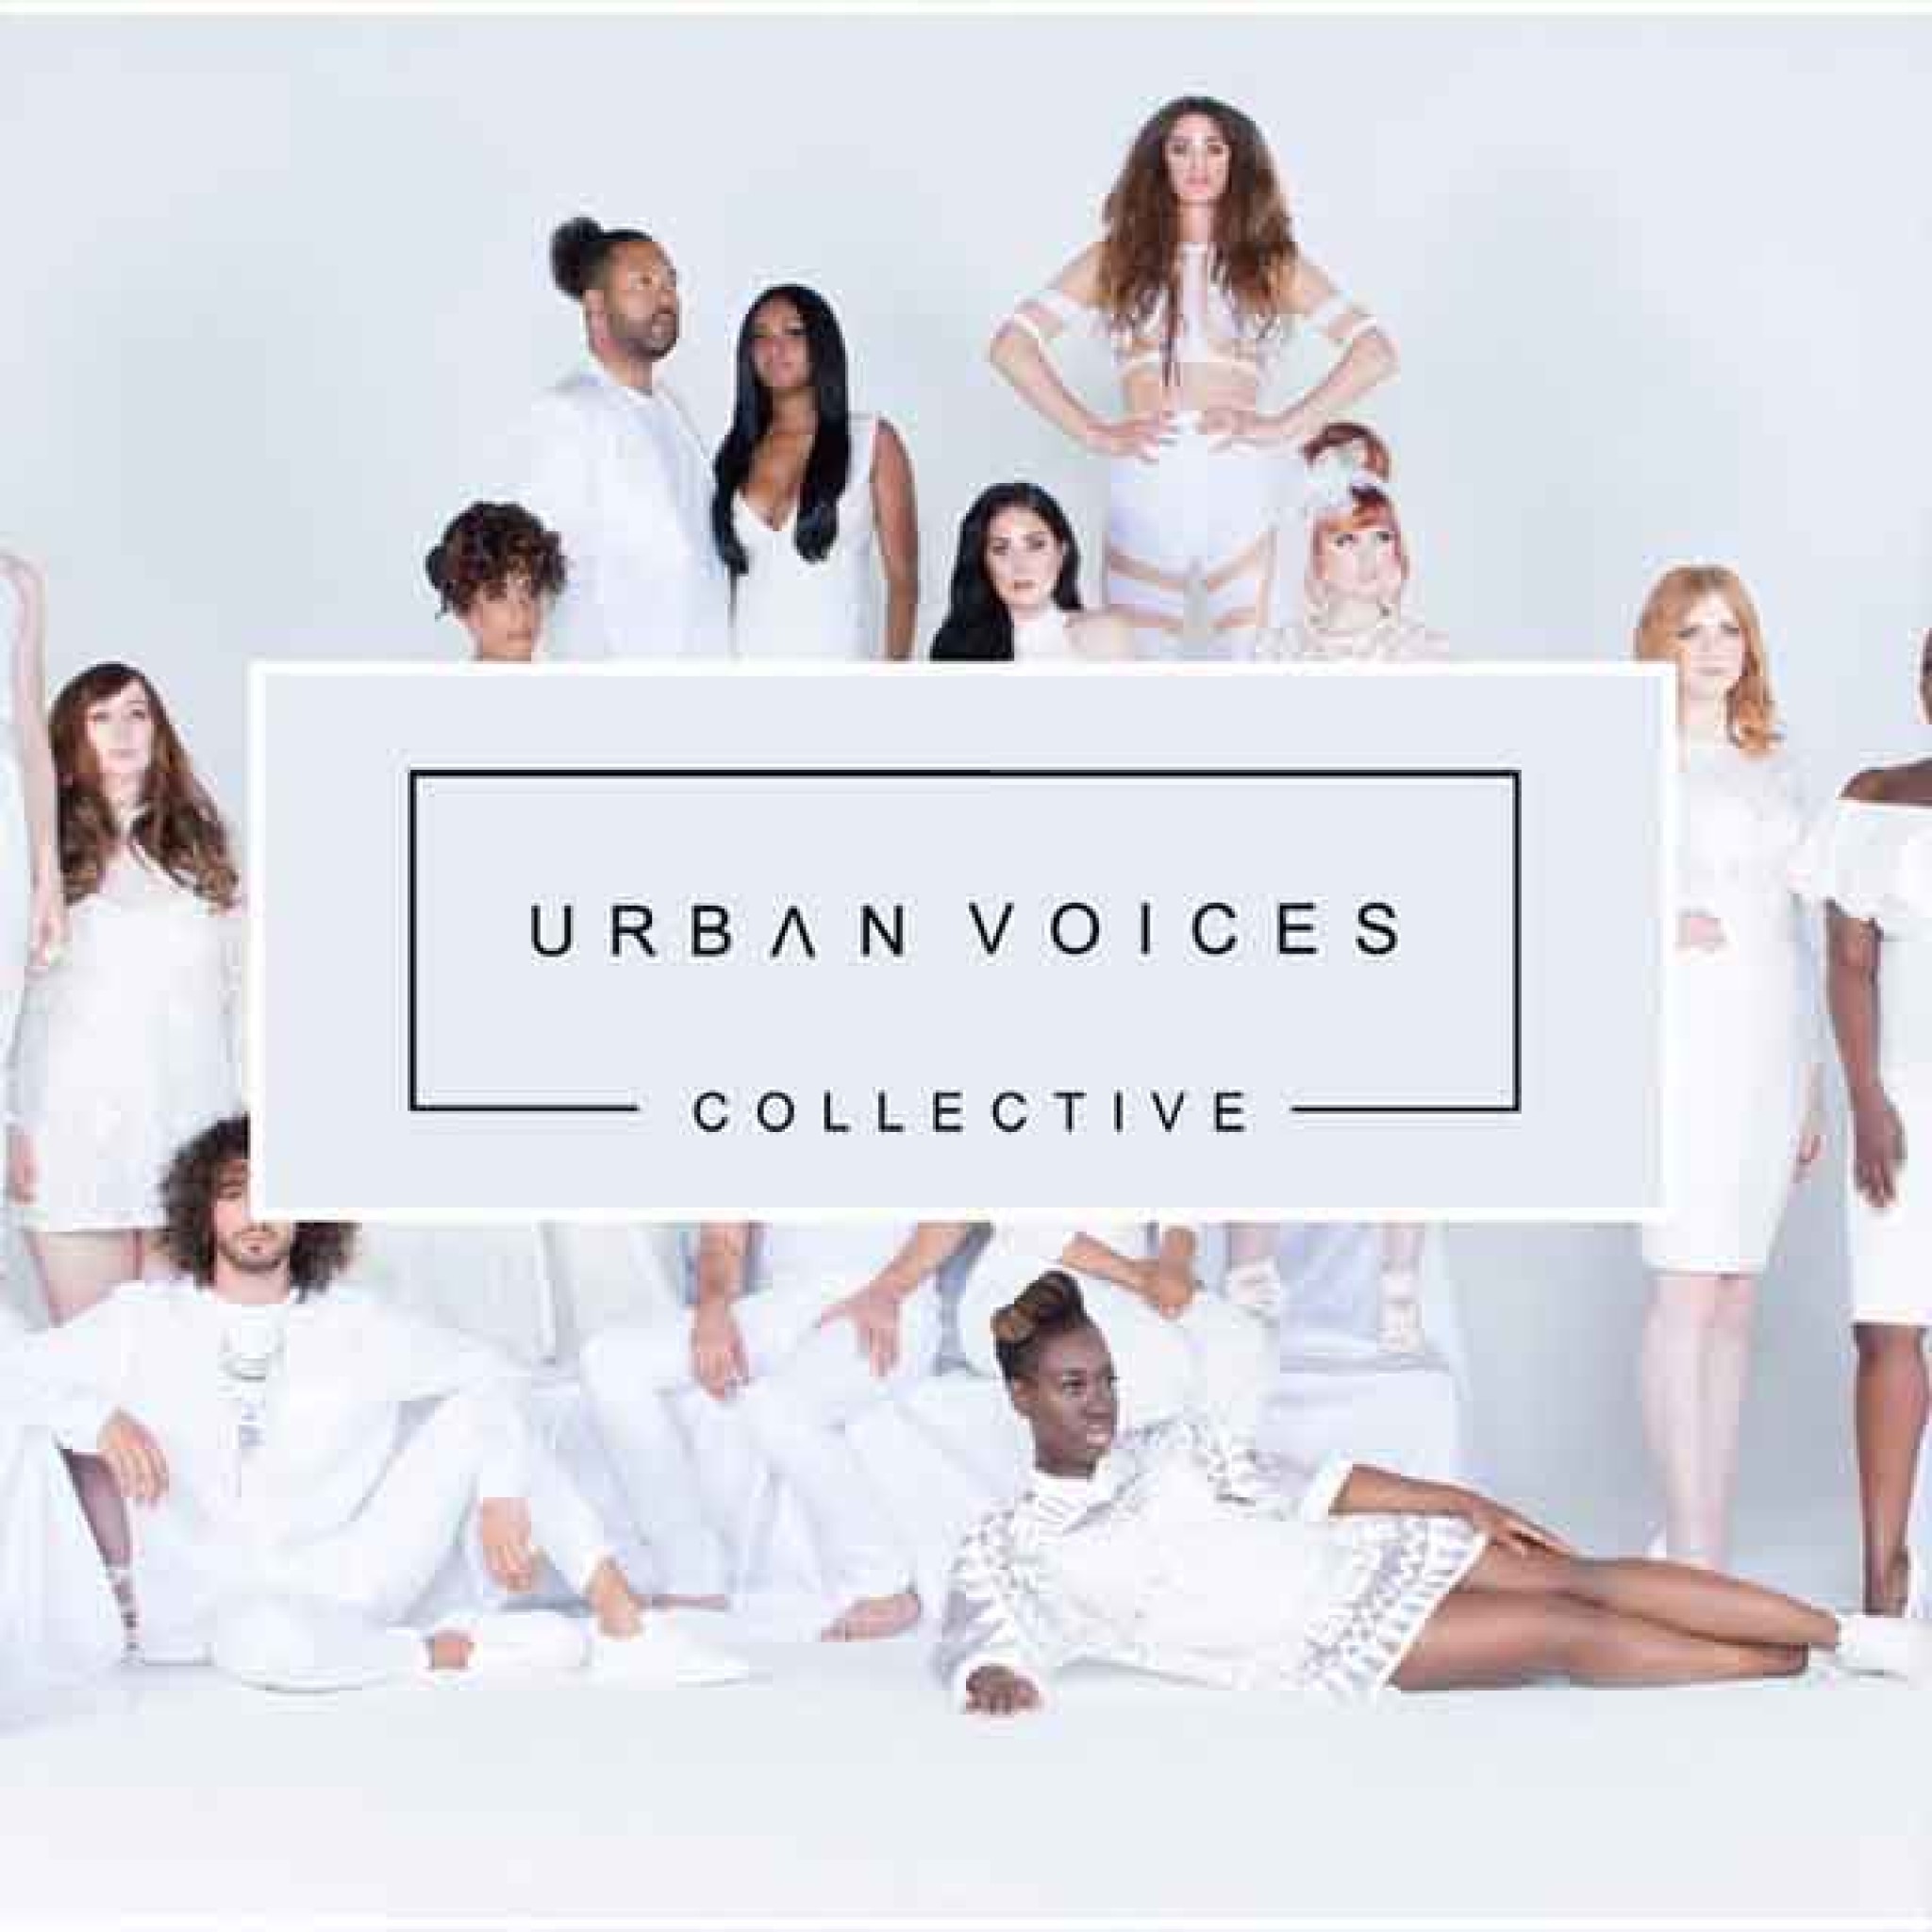 Urban-Voices-Collective-Jam-Creative-Consultancy.jpg